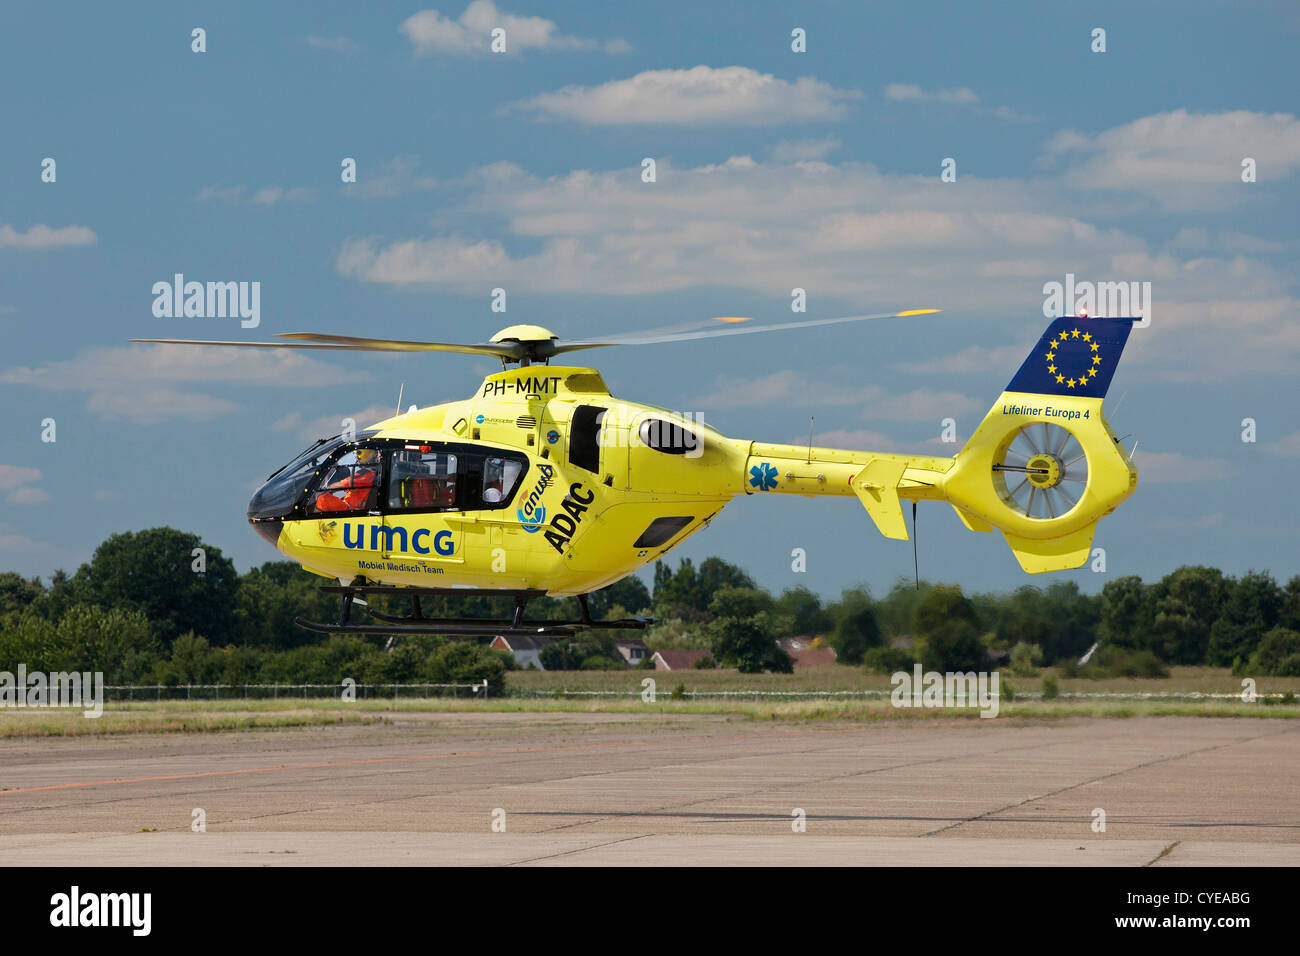 Die Niederlande, Eelde, Groningen Airport. ANWB, UMCG, ADAG Notfall Hubschrauber, Lifeliner Europa 4. Stockfoto